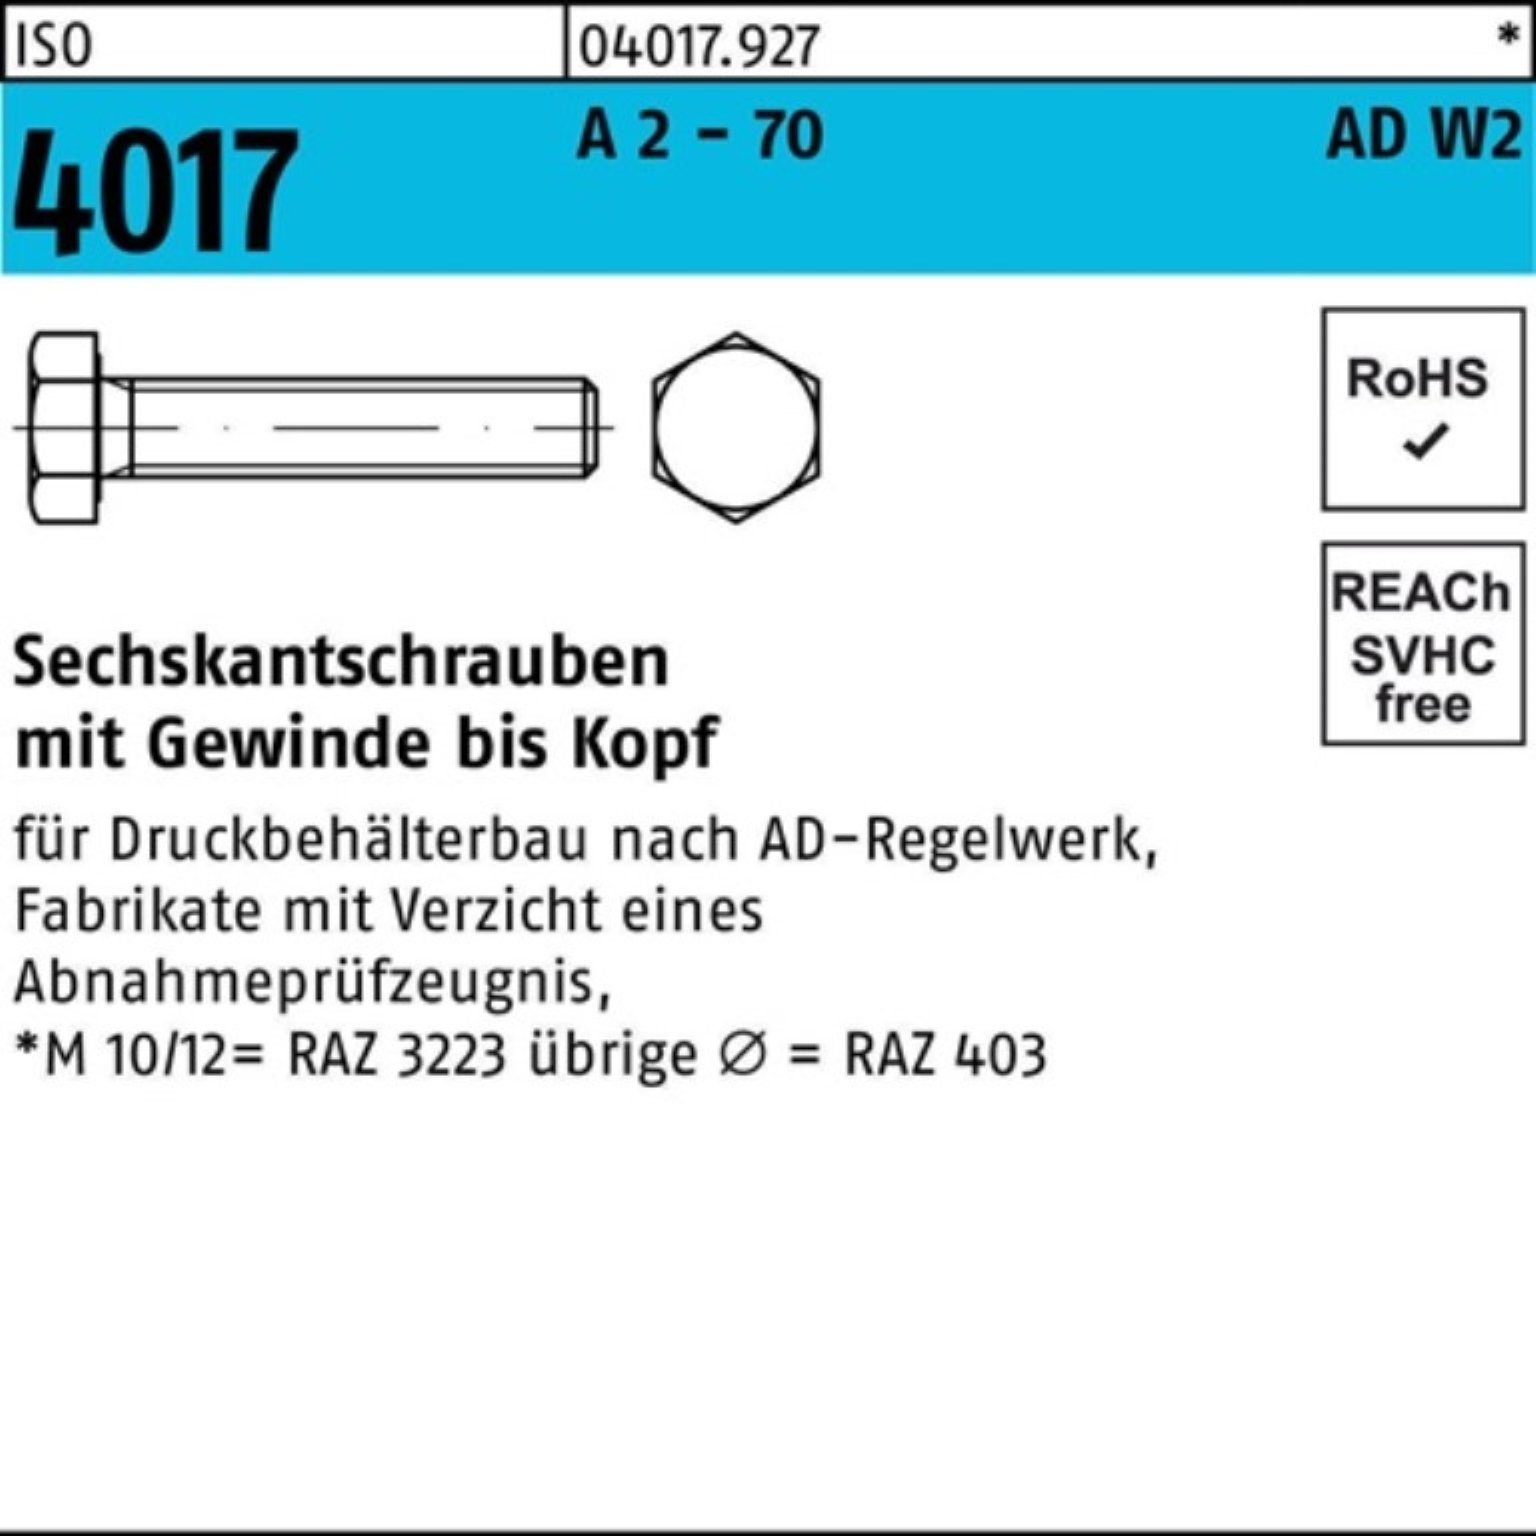 Bufab Sechskantschraube 100er Pack Sechskantschraube ISO 4017 VG M16x 50 A 2 - 70 AD-W2 25 St